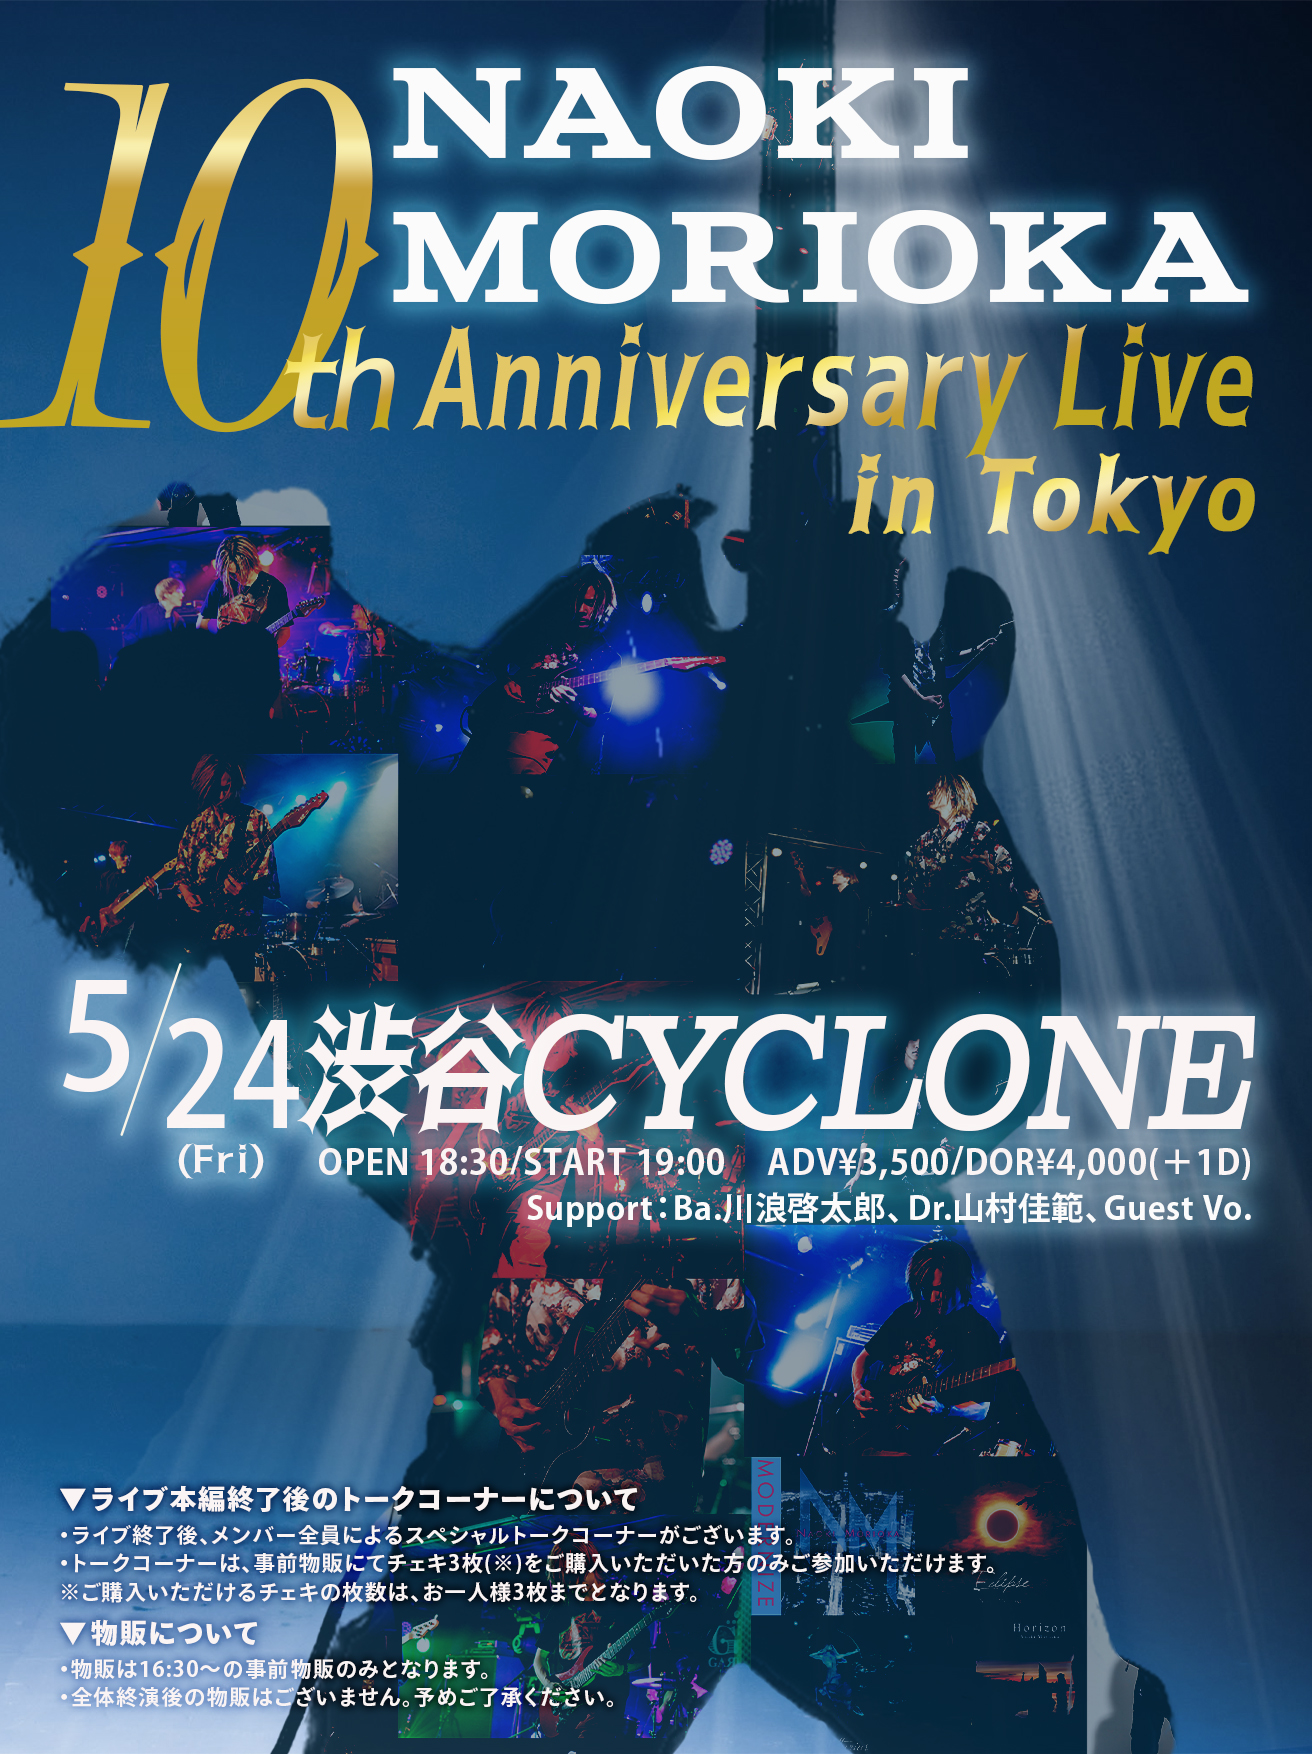 Naoki Morioka 10th Anniversary Live in Tokyo